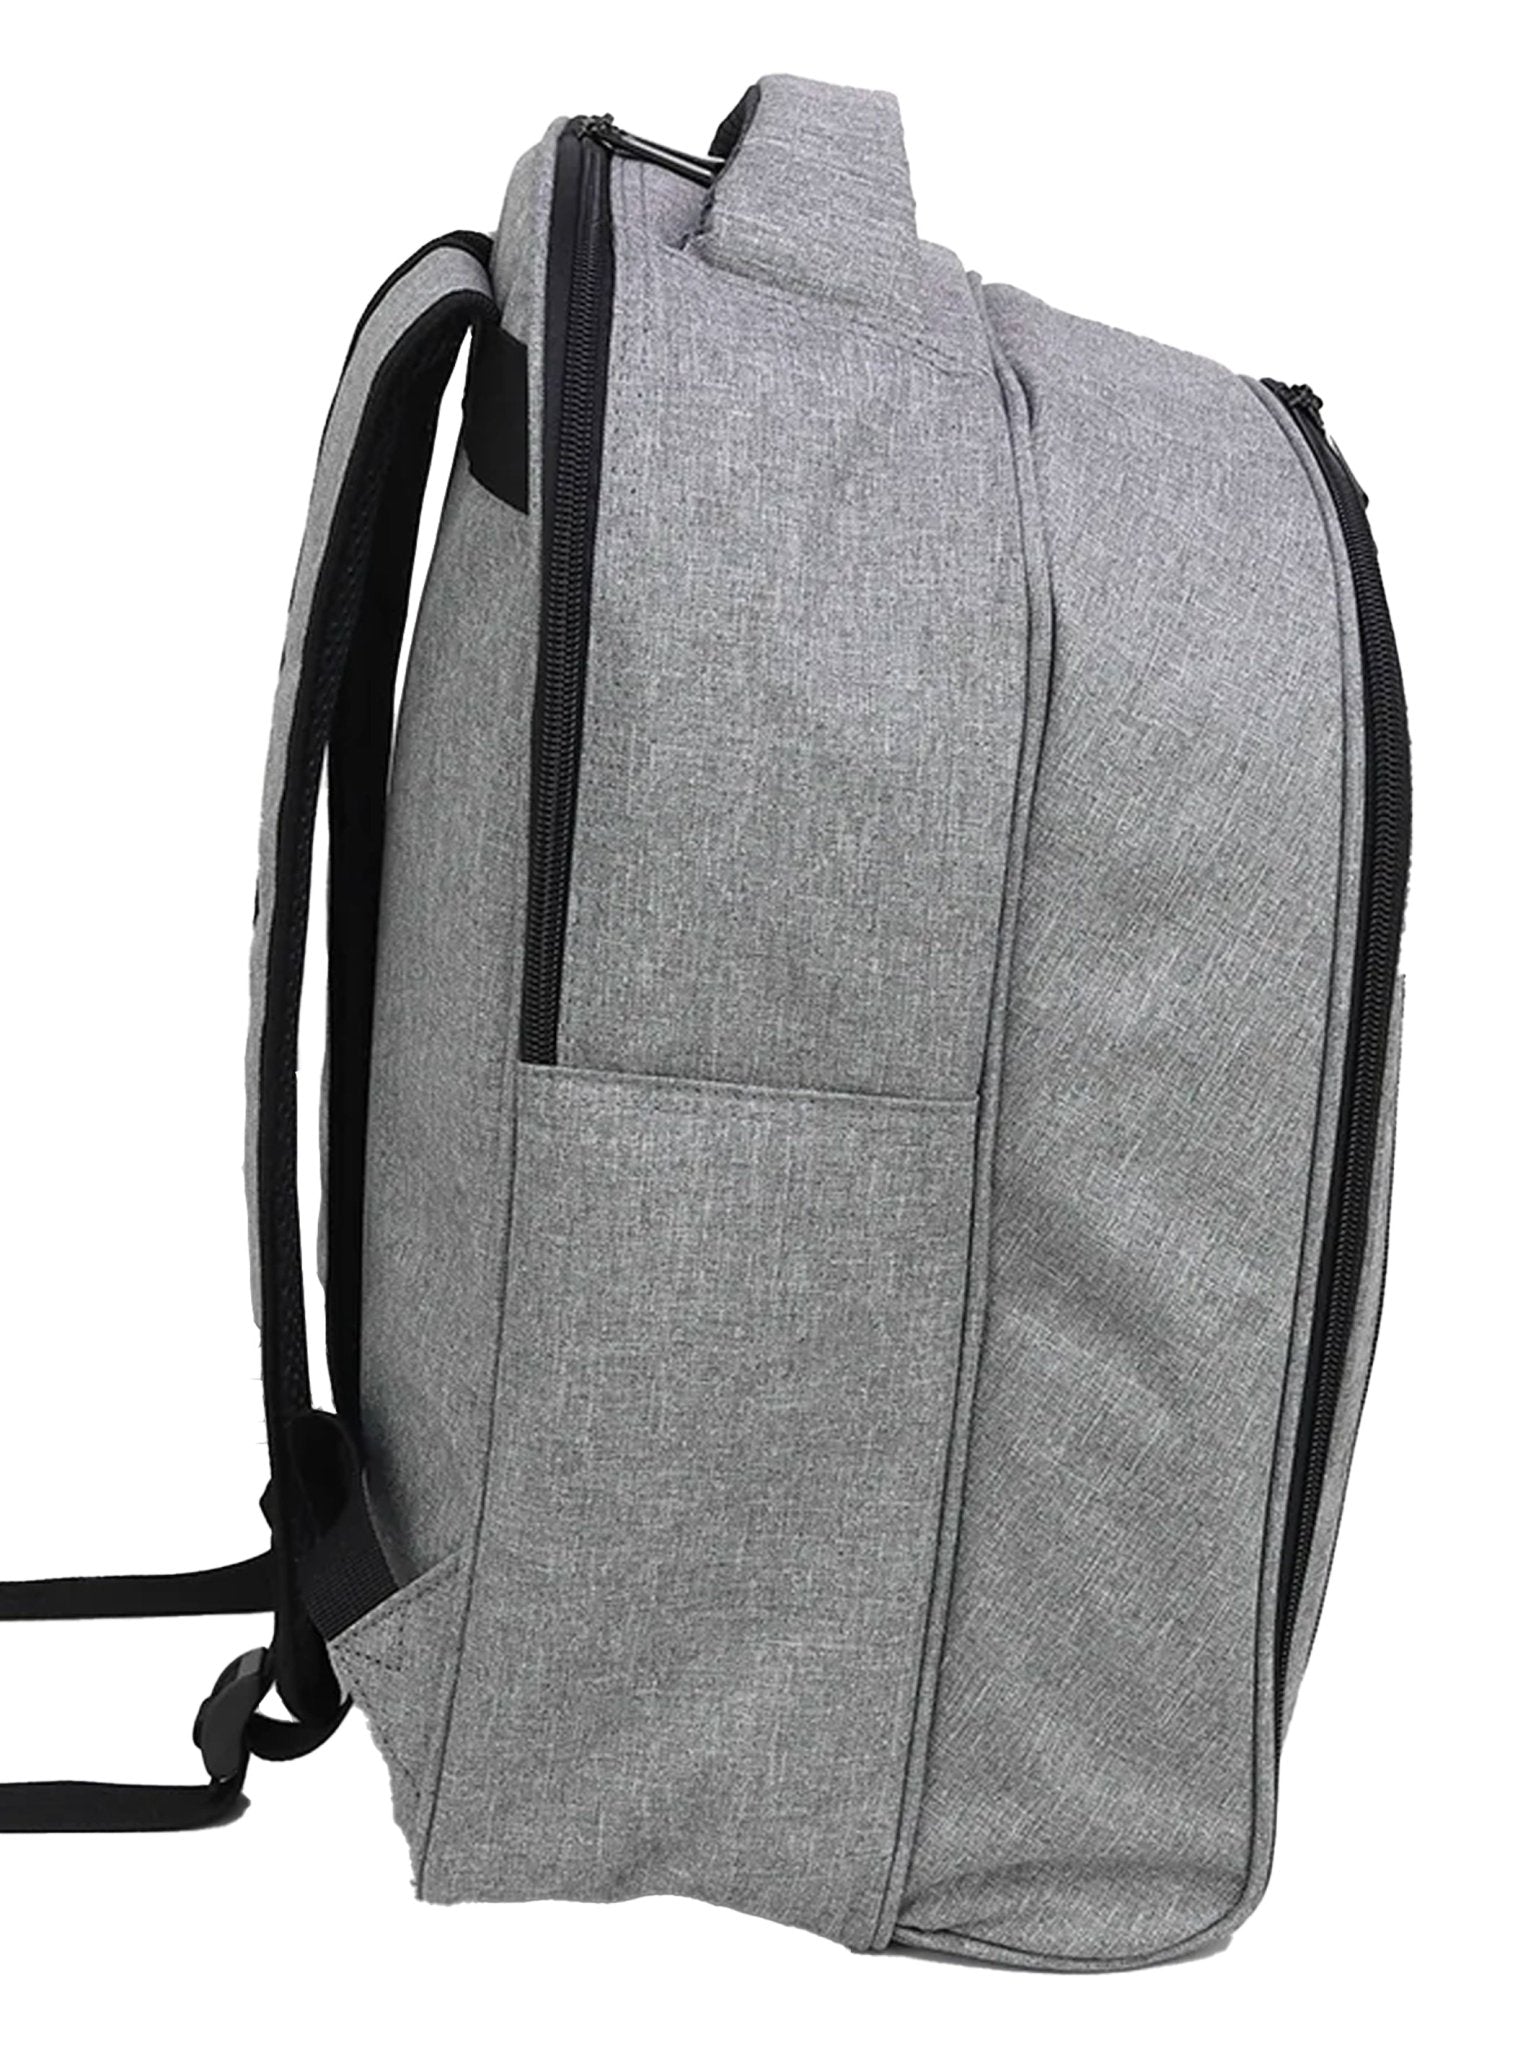 4elementsclothingSophosSophos - Premium Cool bag / Cooler Backpack with picnic set - by SophosLunch Boxes795040